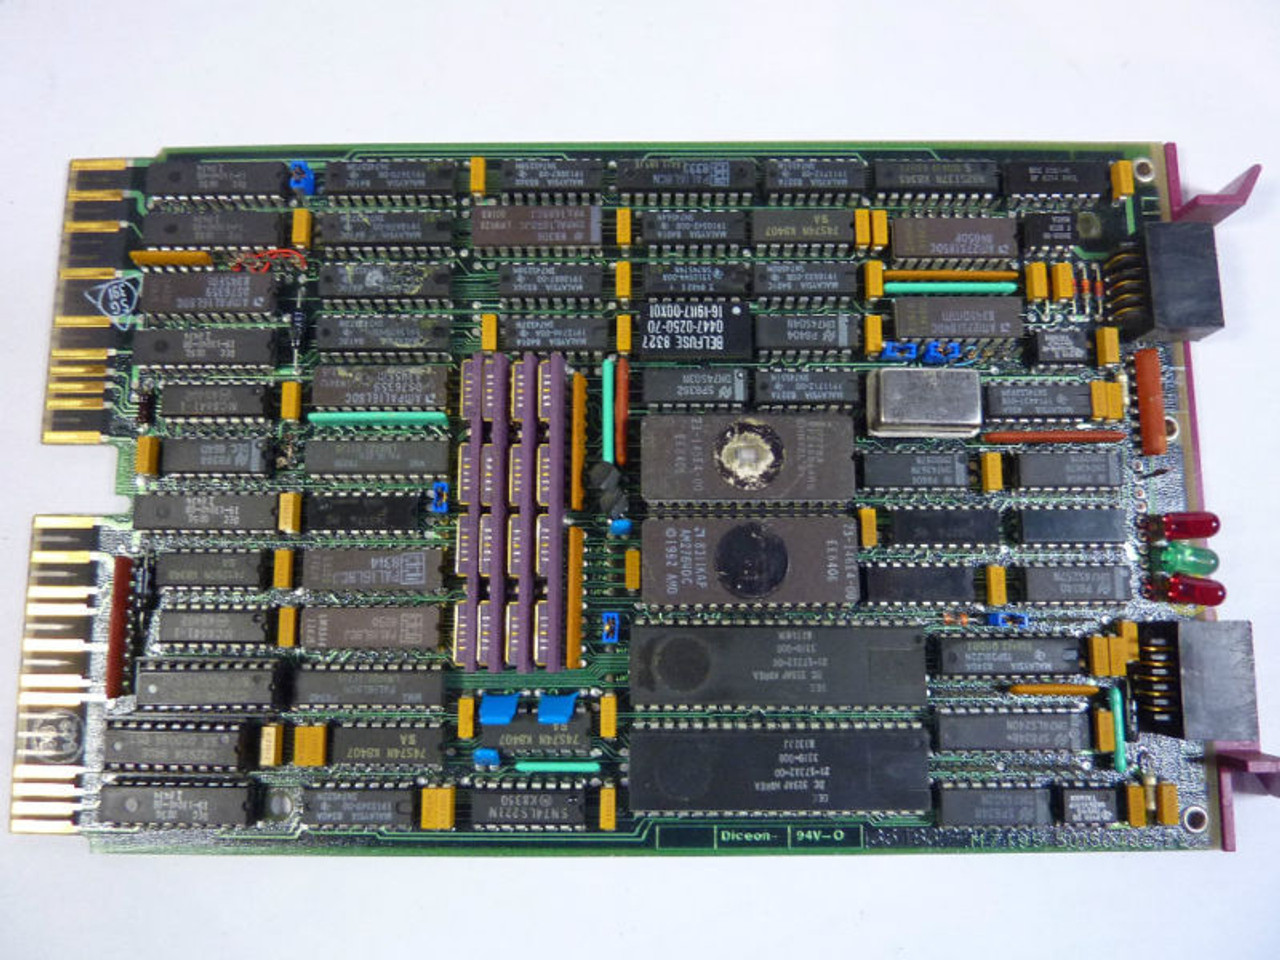 Diceon 94V-O PC Controller Board USED